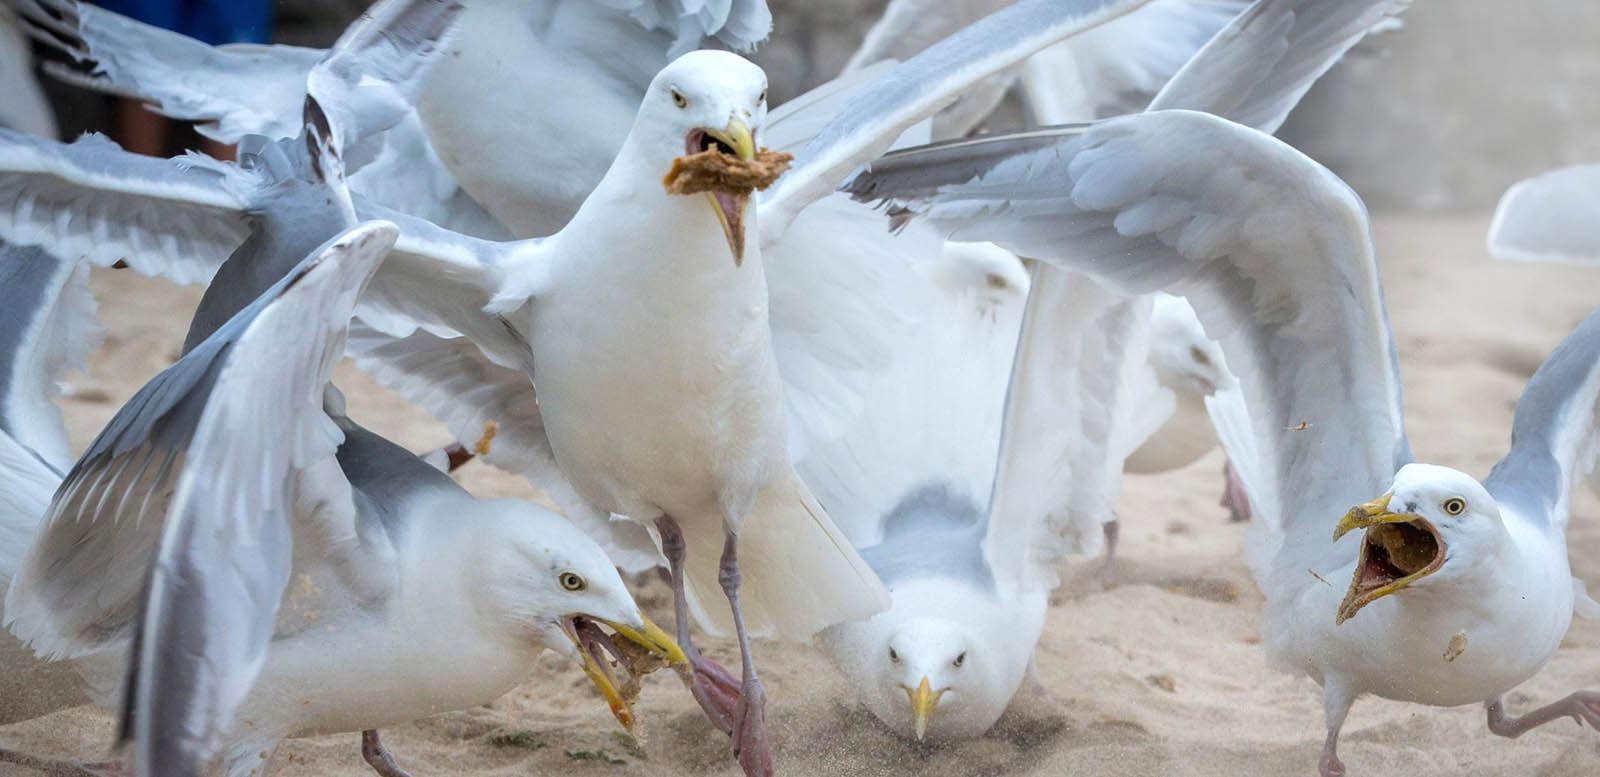 Controlling seagulls